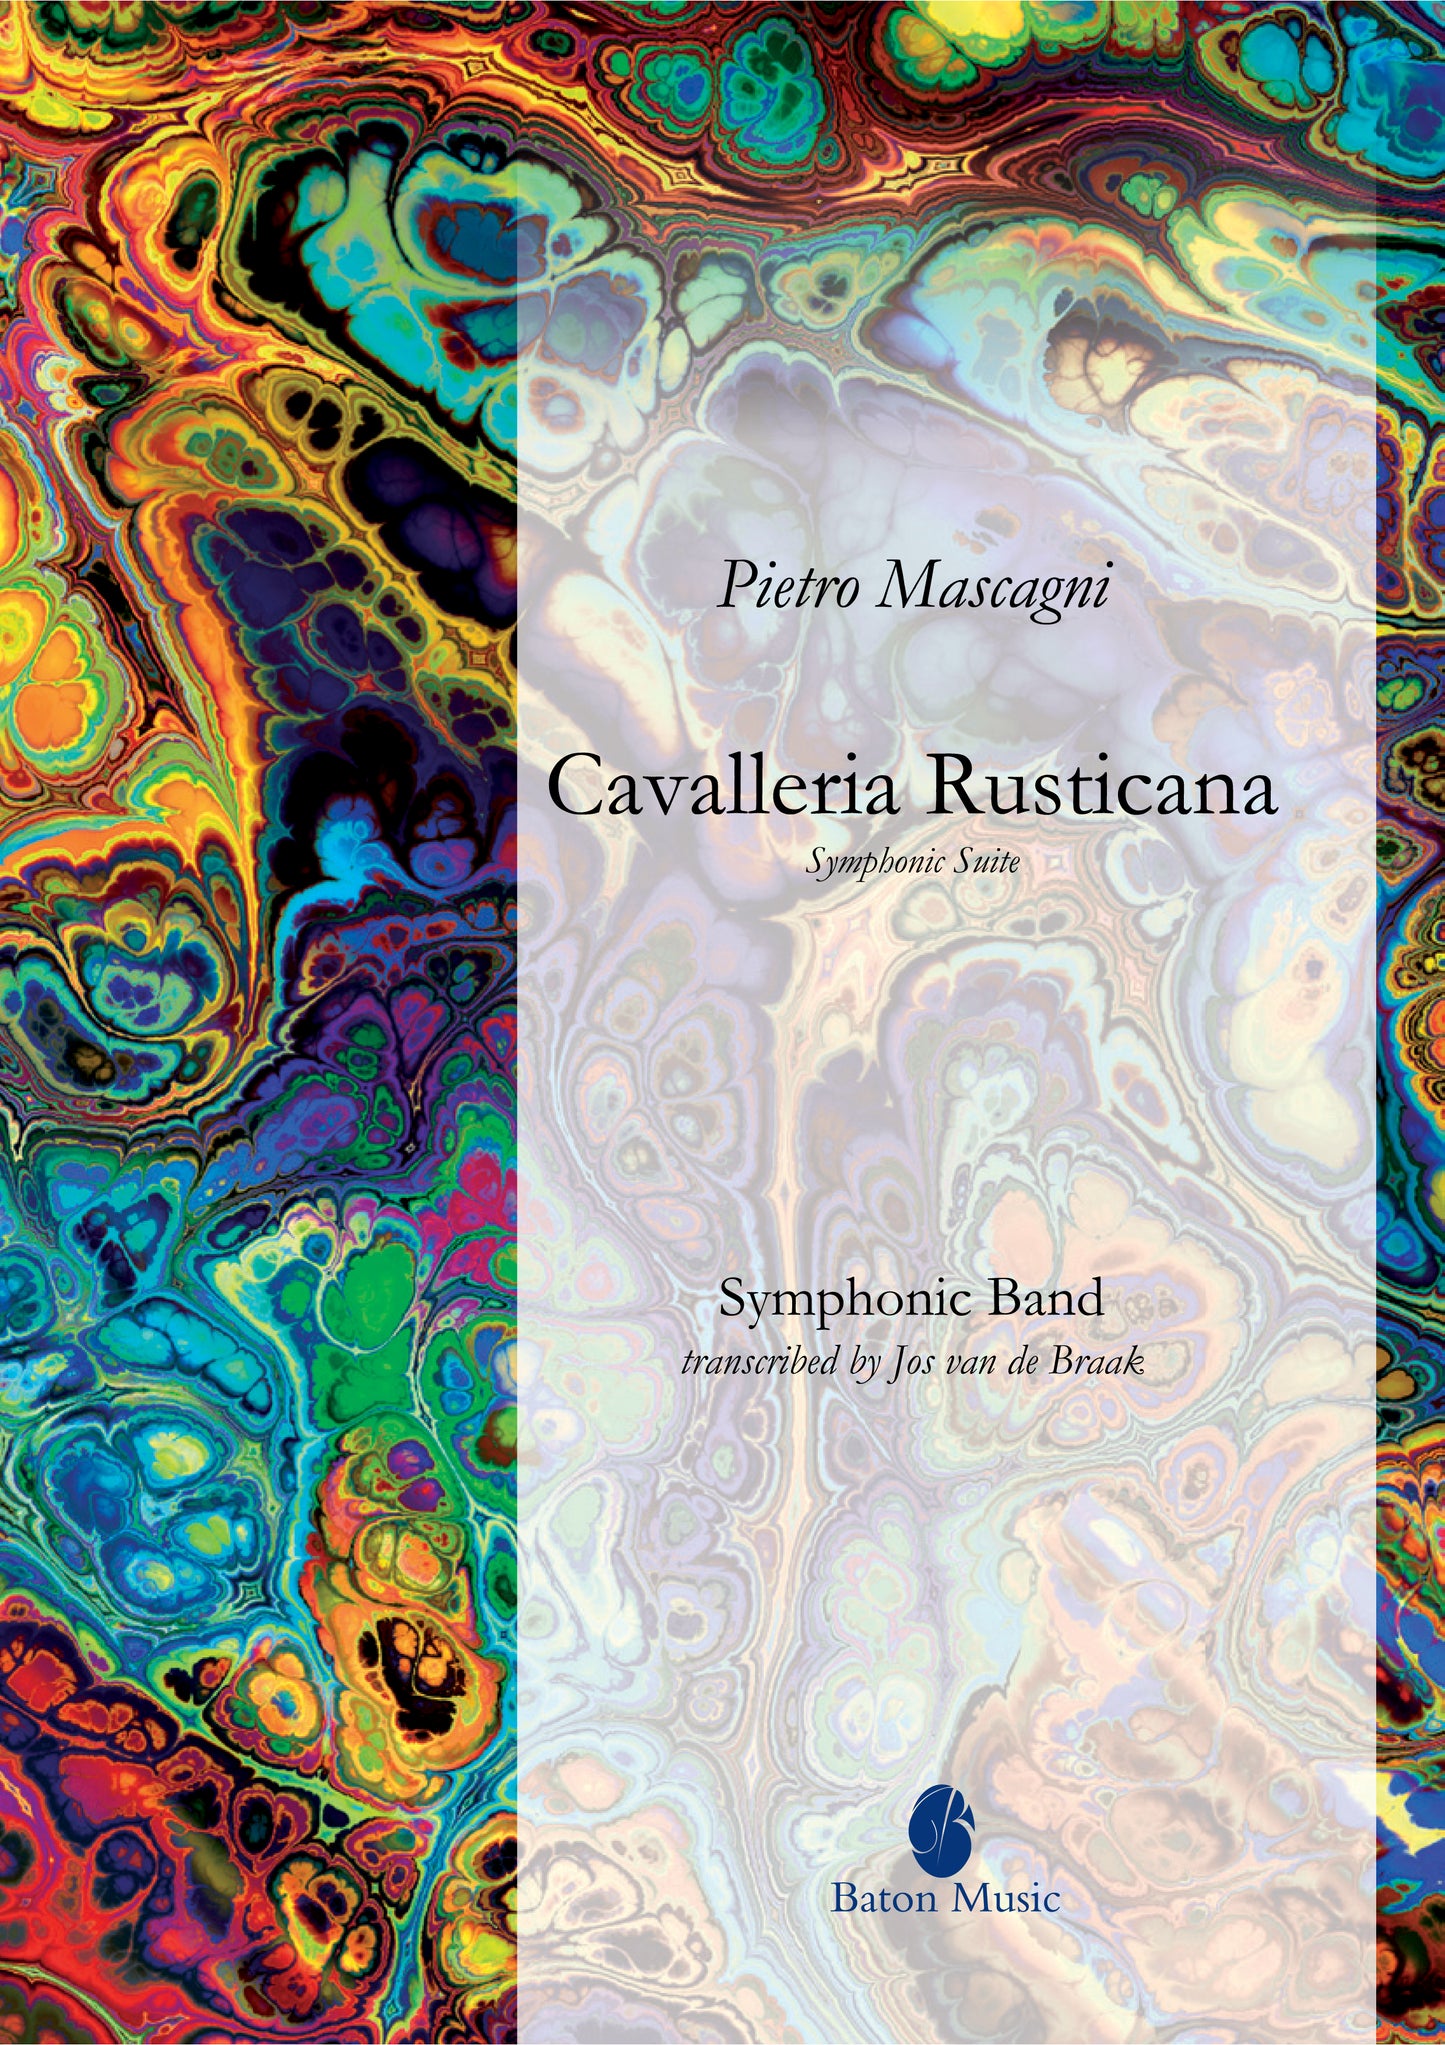 Cavalleria Rusticana (Symphonic Suite) - Mascagni